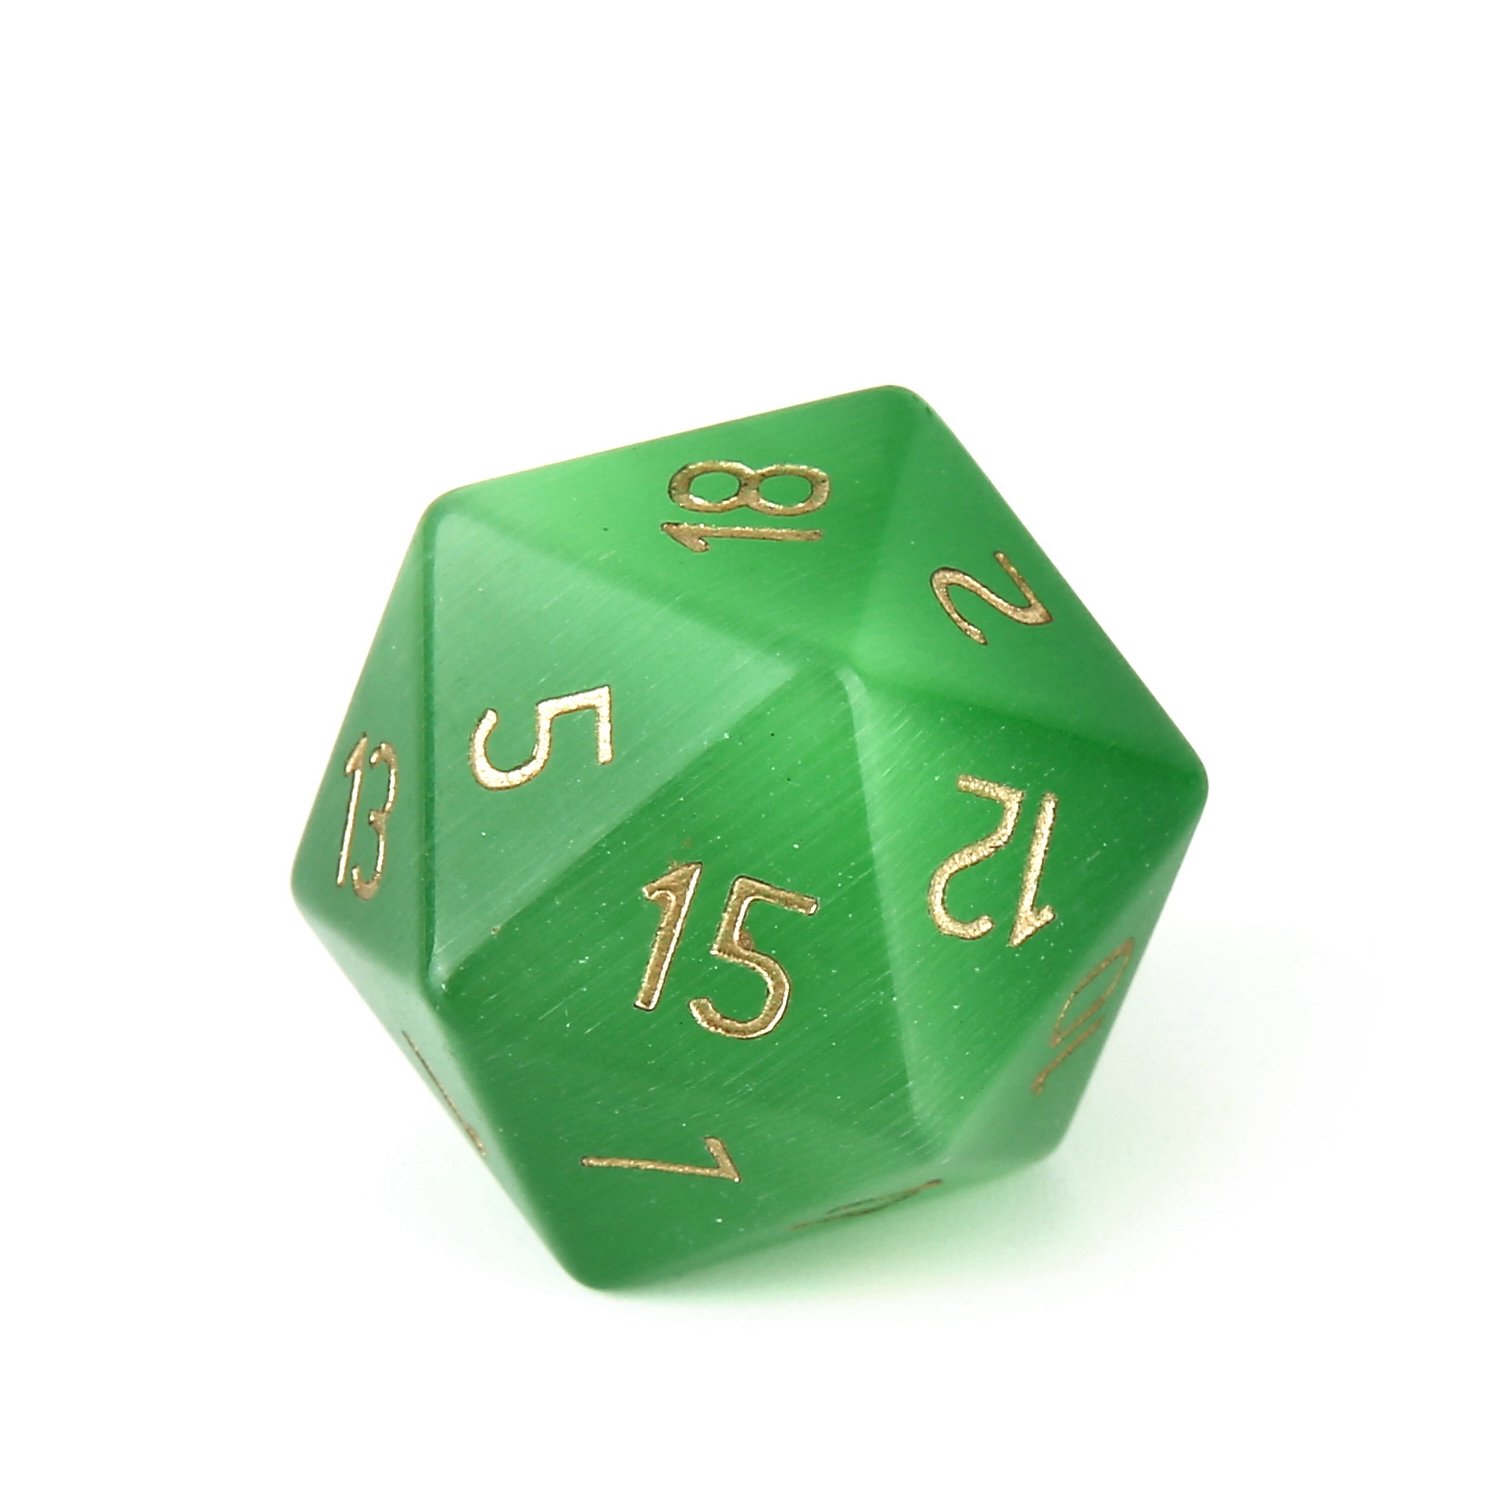 7:D20 icosahedron